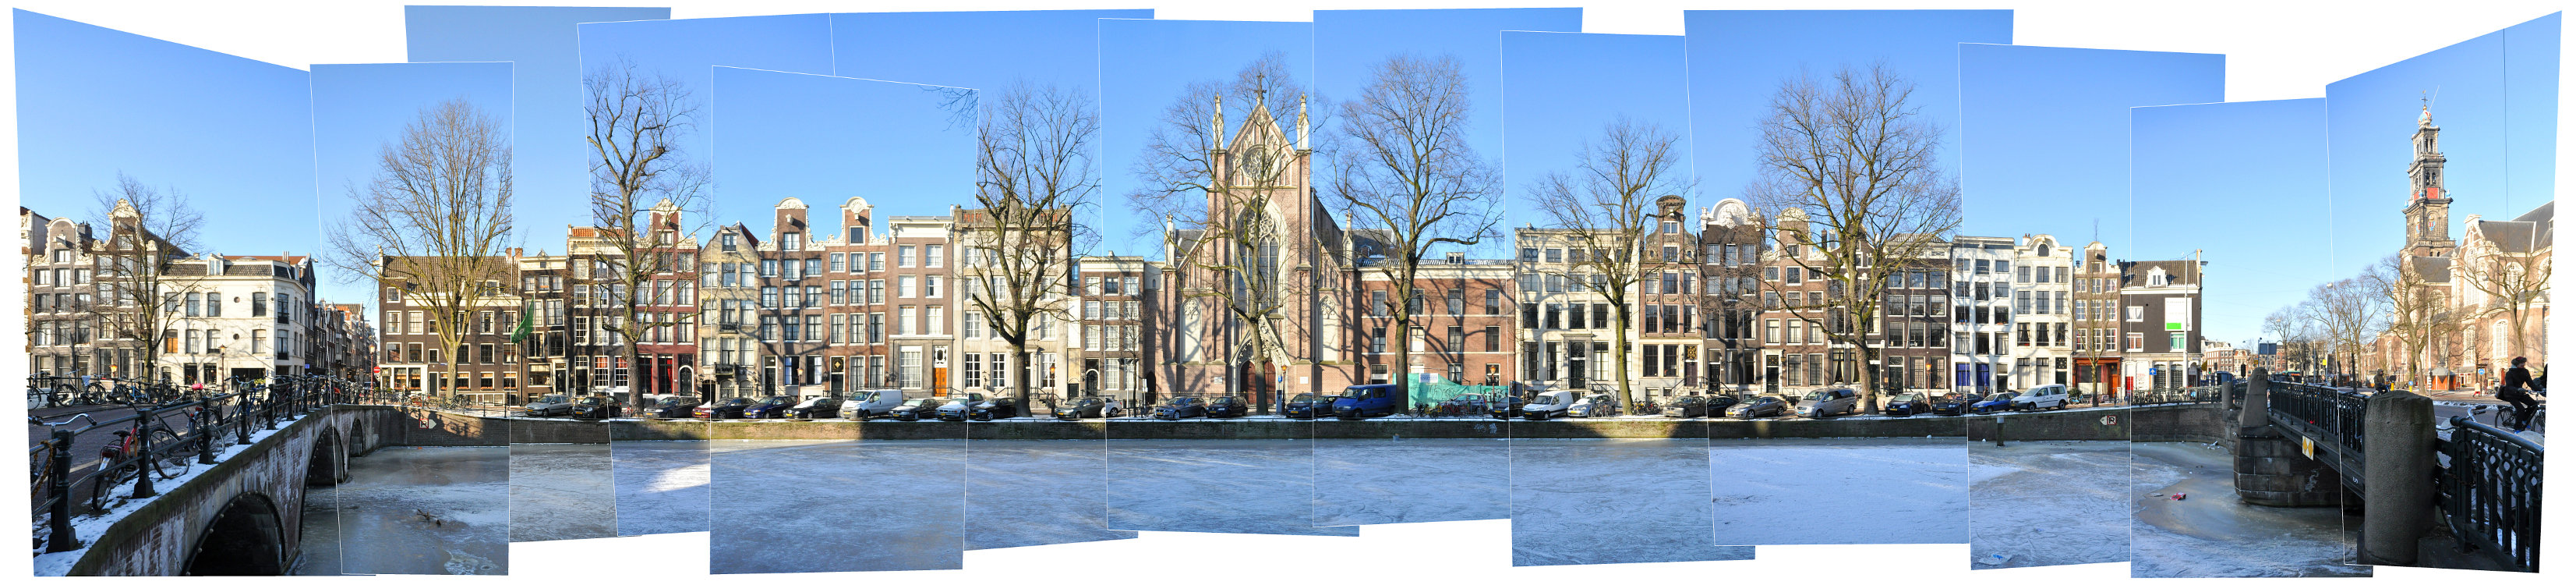 Onze-Lieve-Vrouwekerk in Amsterdam street front on Keizersgracht